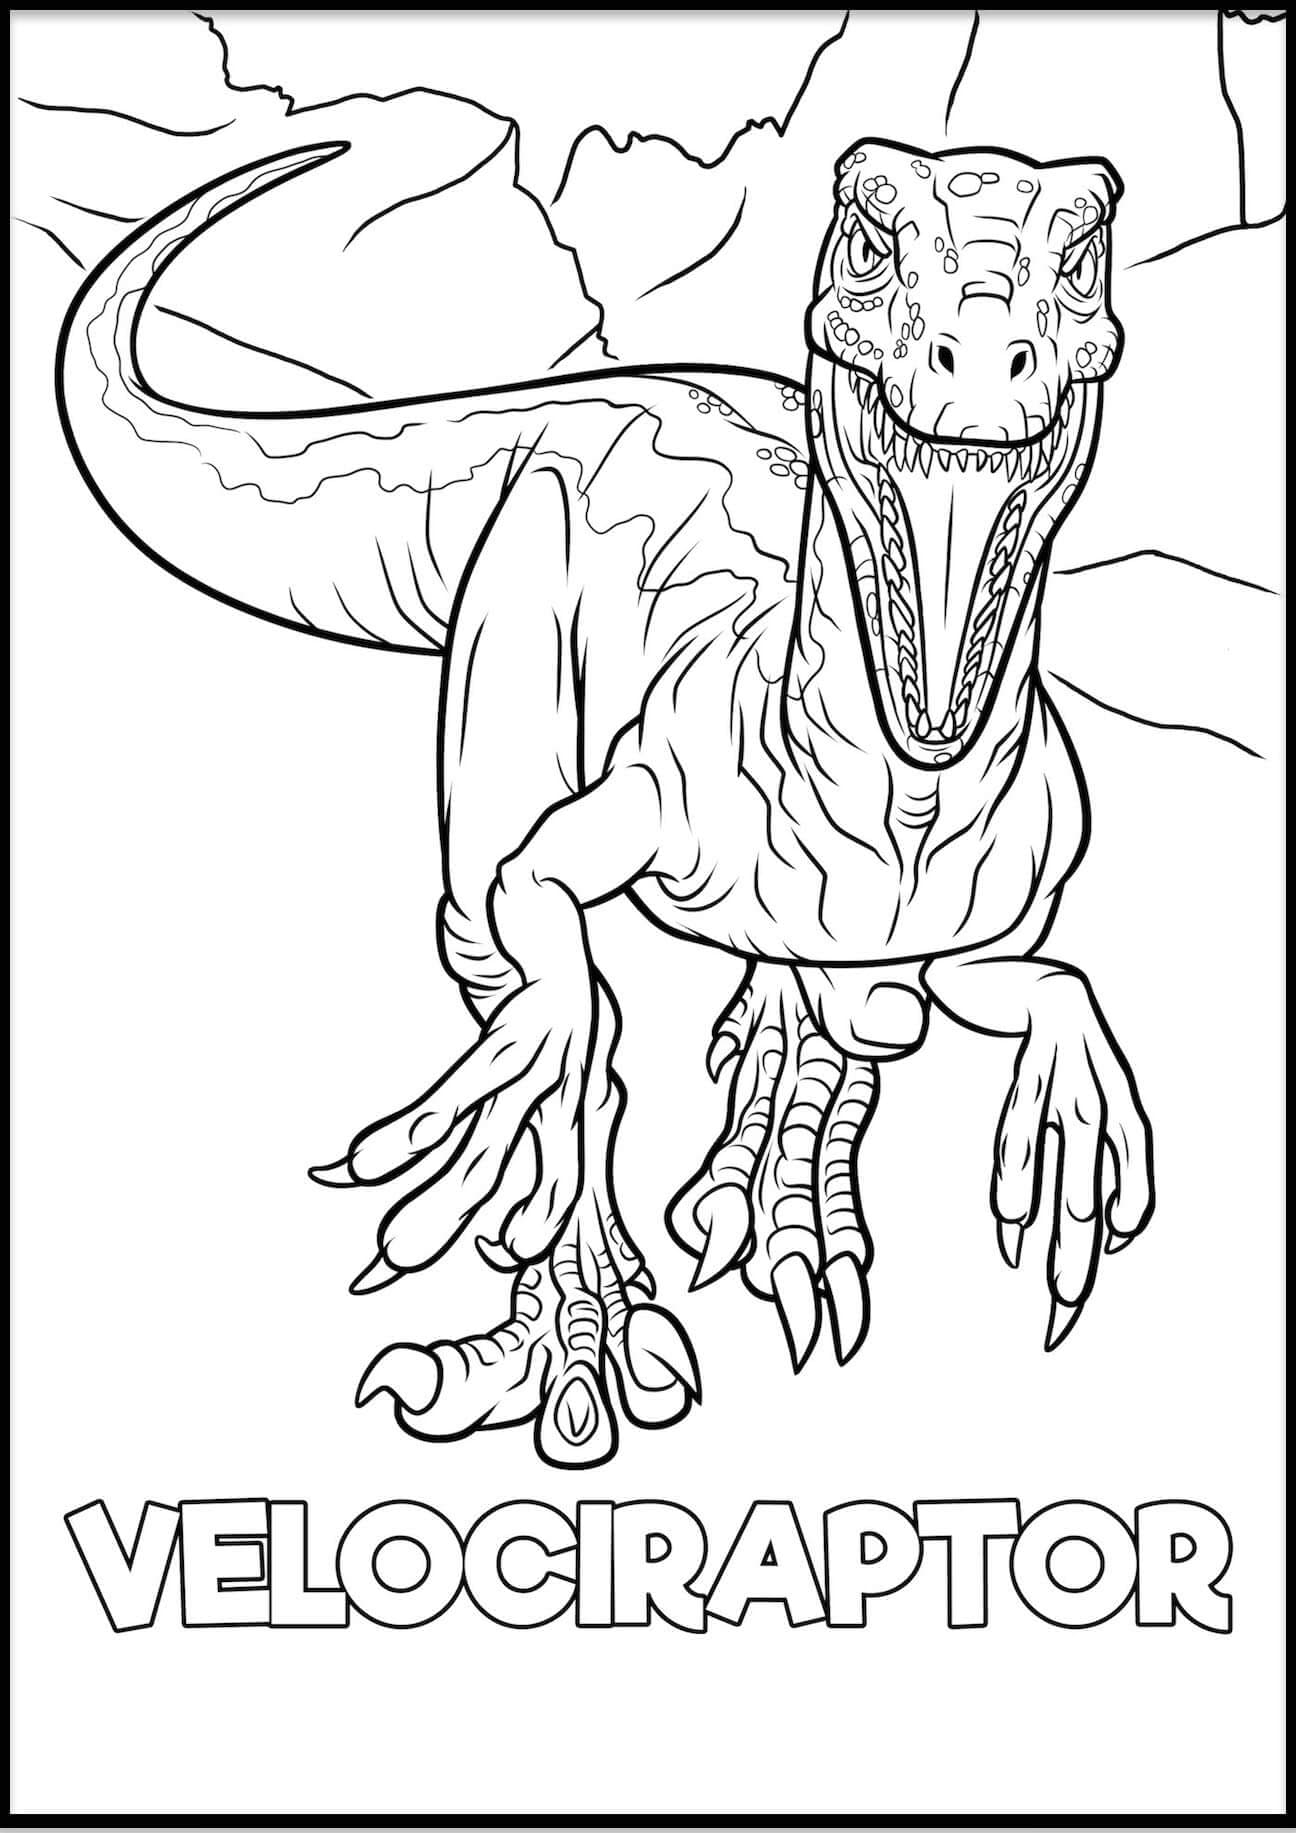 Velociraptor dinozaur